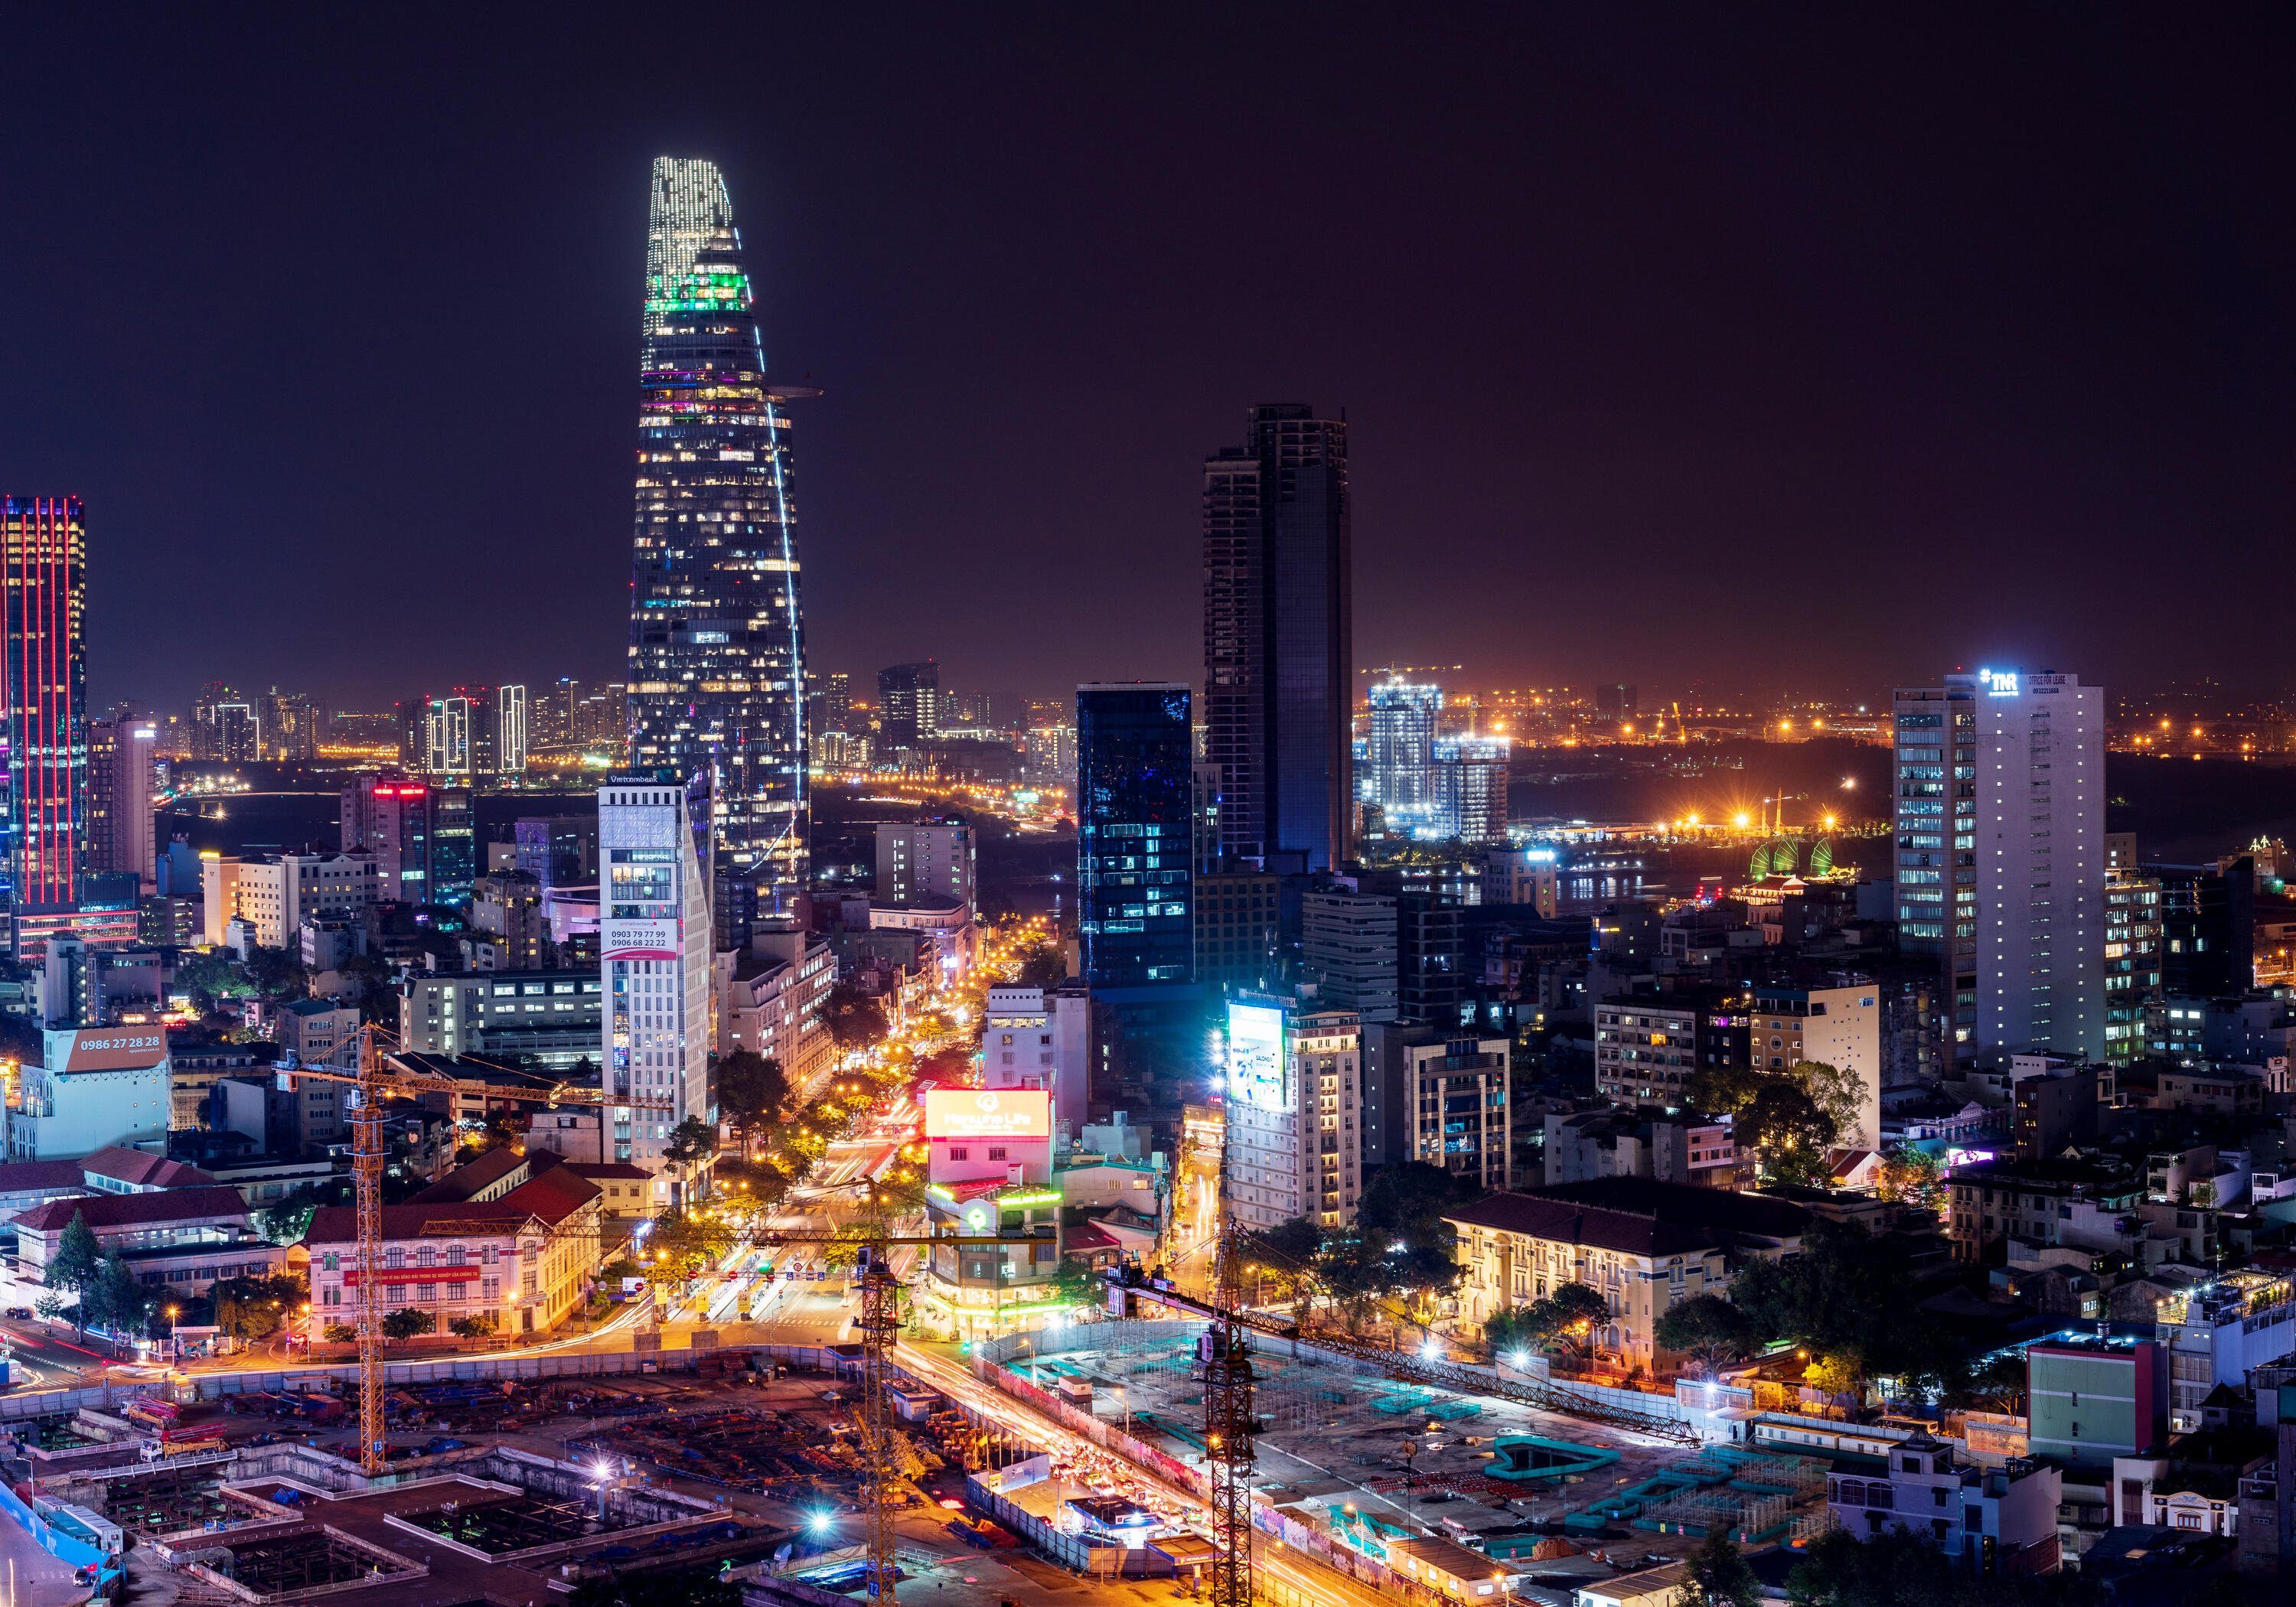 wandmotiv24 Fototapete Skyline Nacht Ho Chi Minh Stadt, glatt, Wandtapete, Motivtapete, matt, Vliestapete